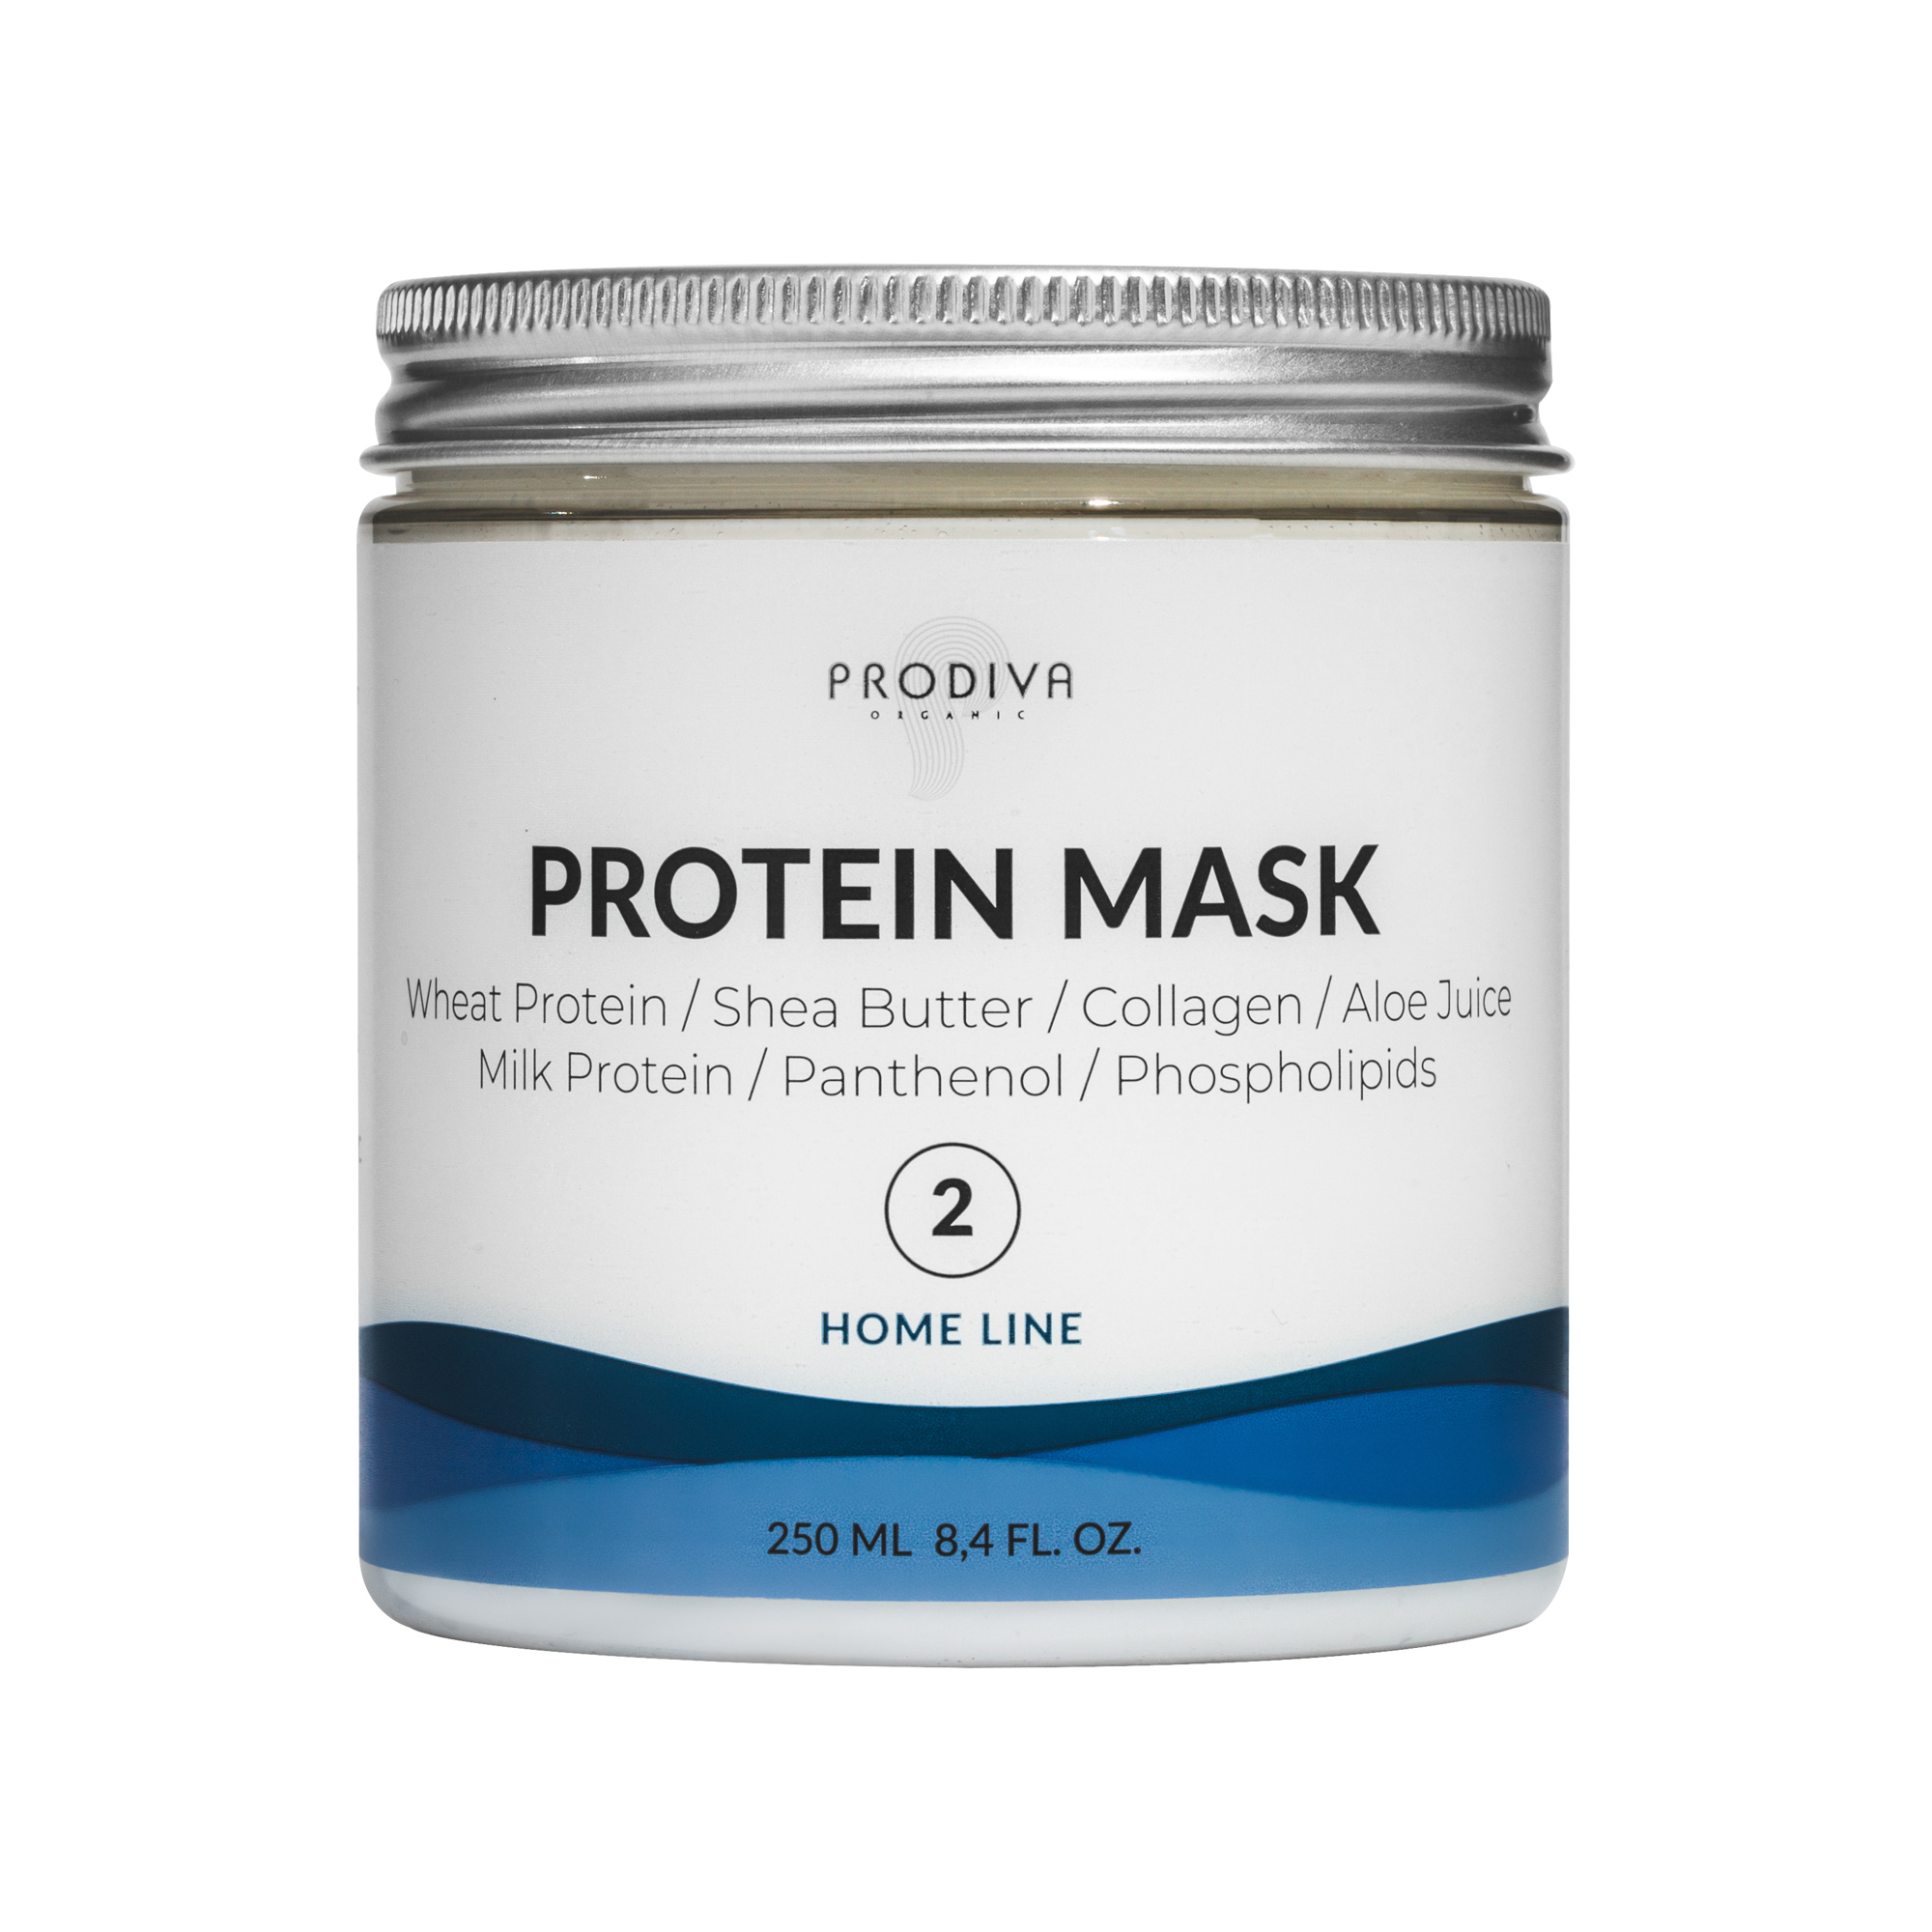 PRODIVA, Маска для протеиновой реконструкции волос Protein Mask Home Care, 250 мл.